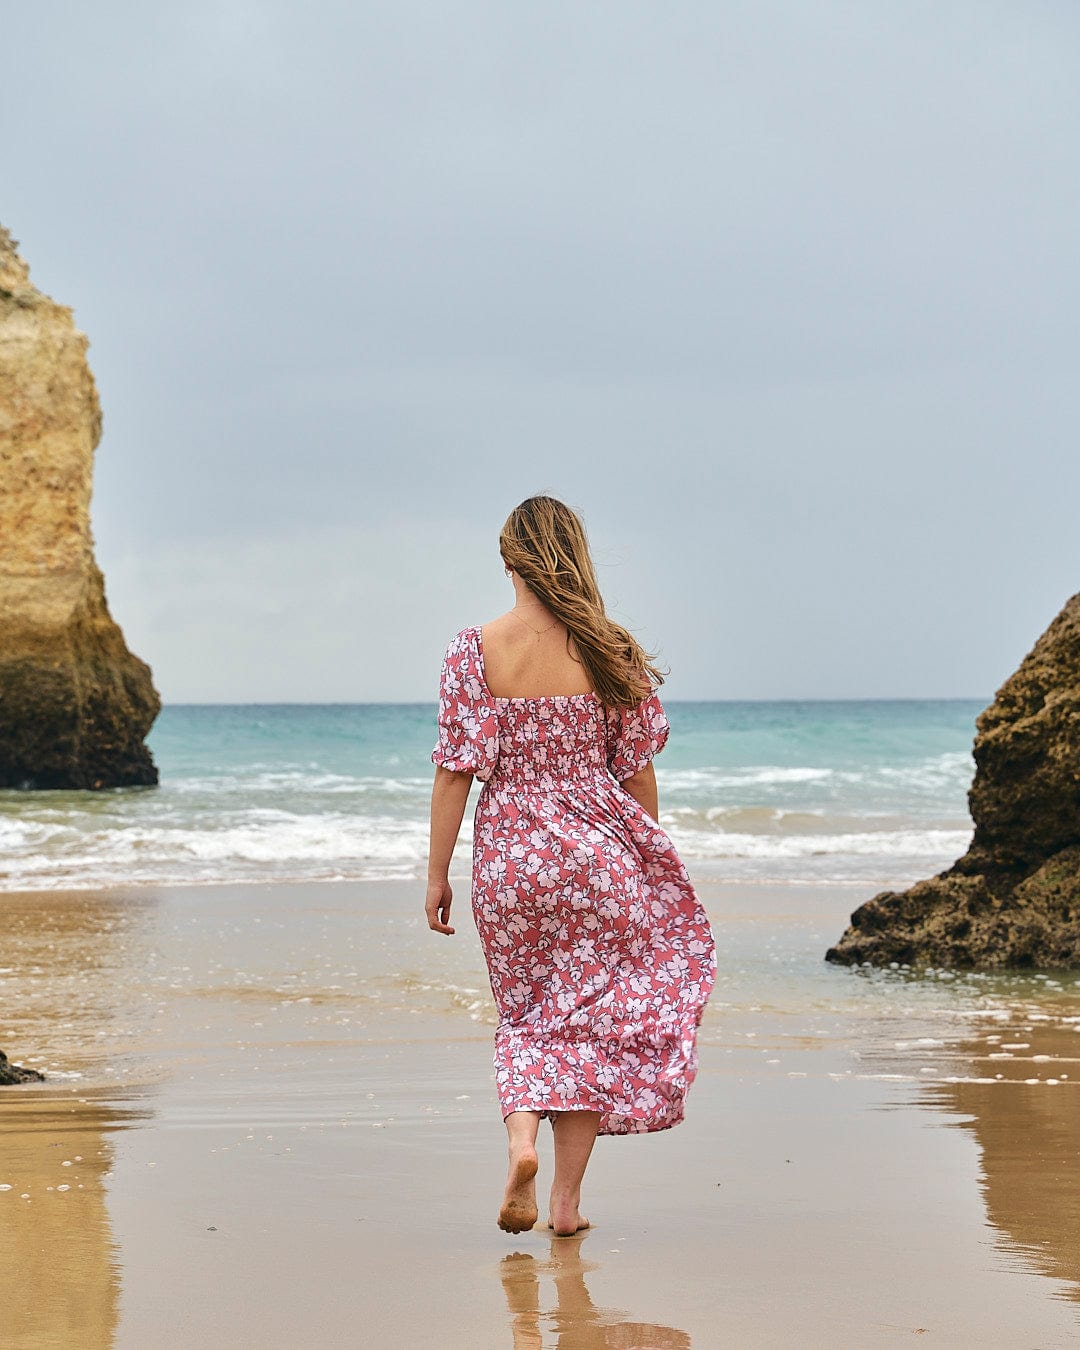 A woman in a Larran - Womens Shirred Dress - Mid Pink by Saltrock walking on the beach.